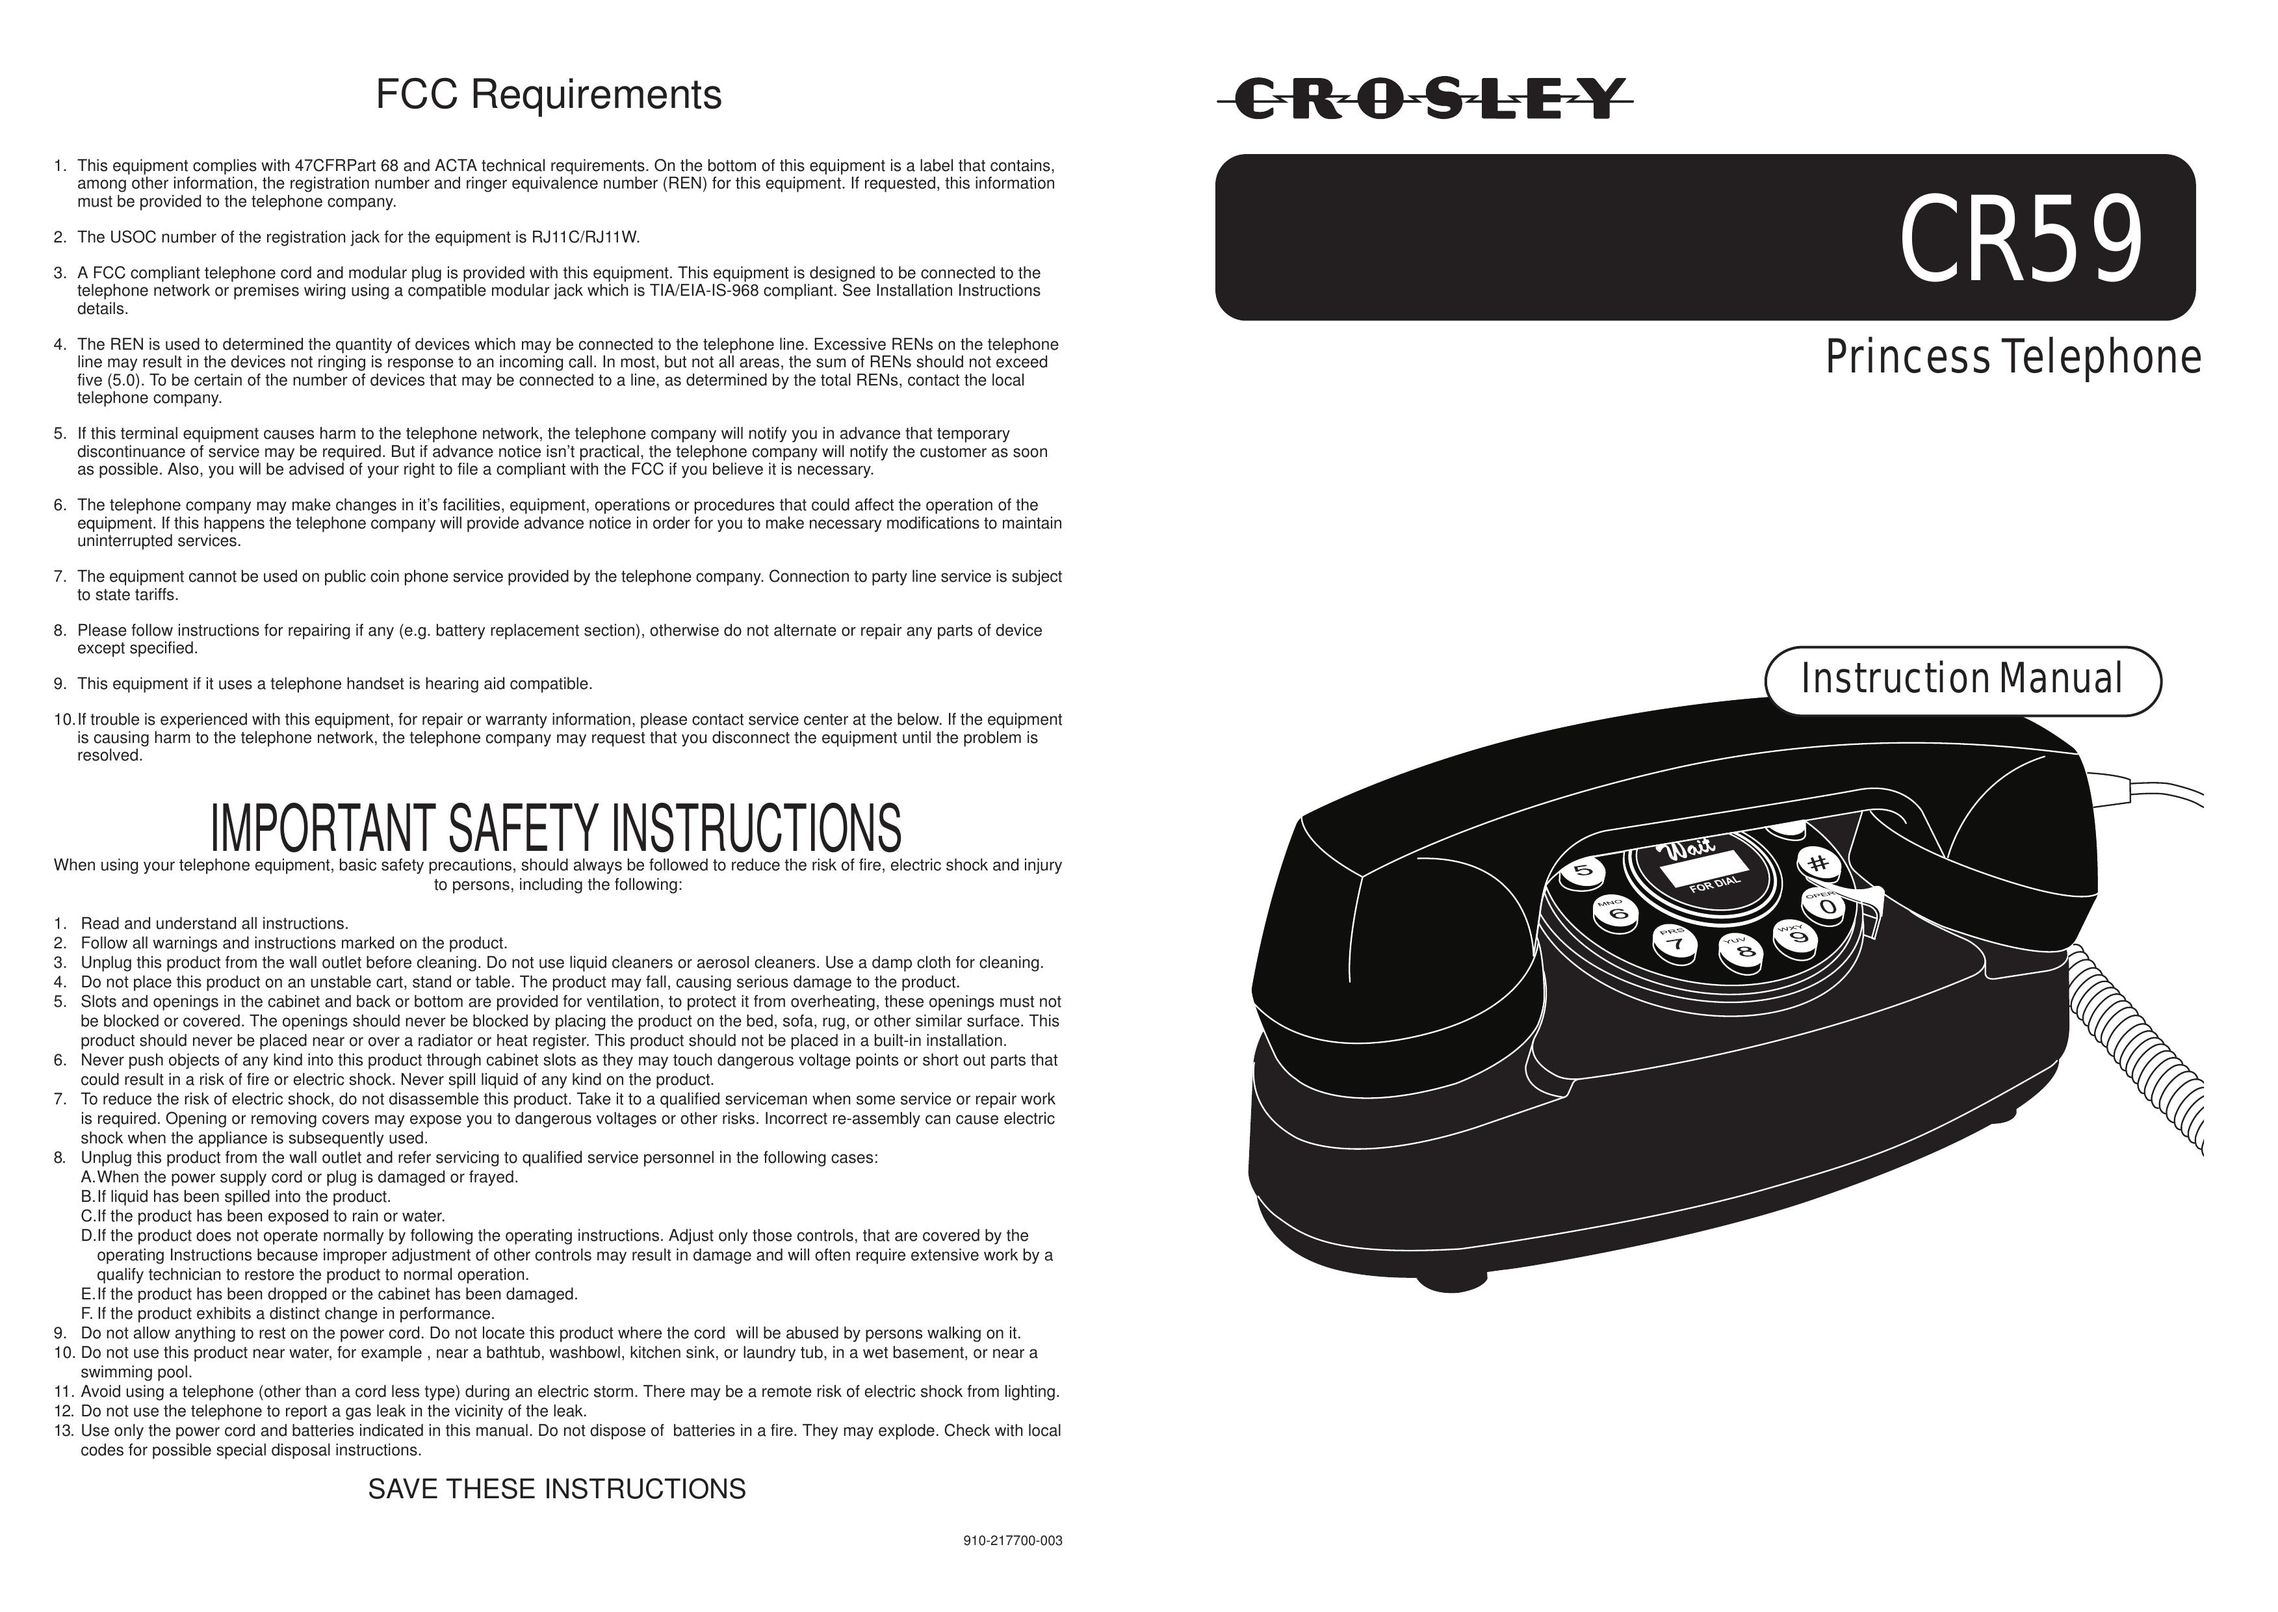 Crosley CR59 Telephone User Manual